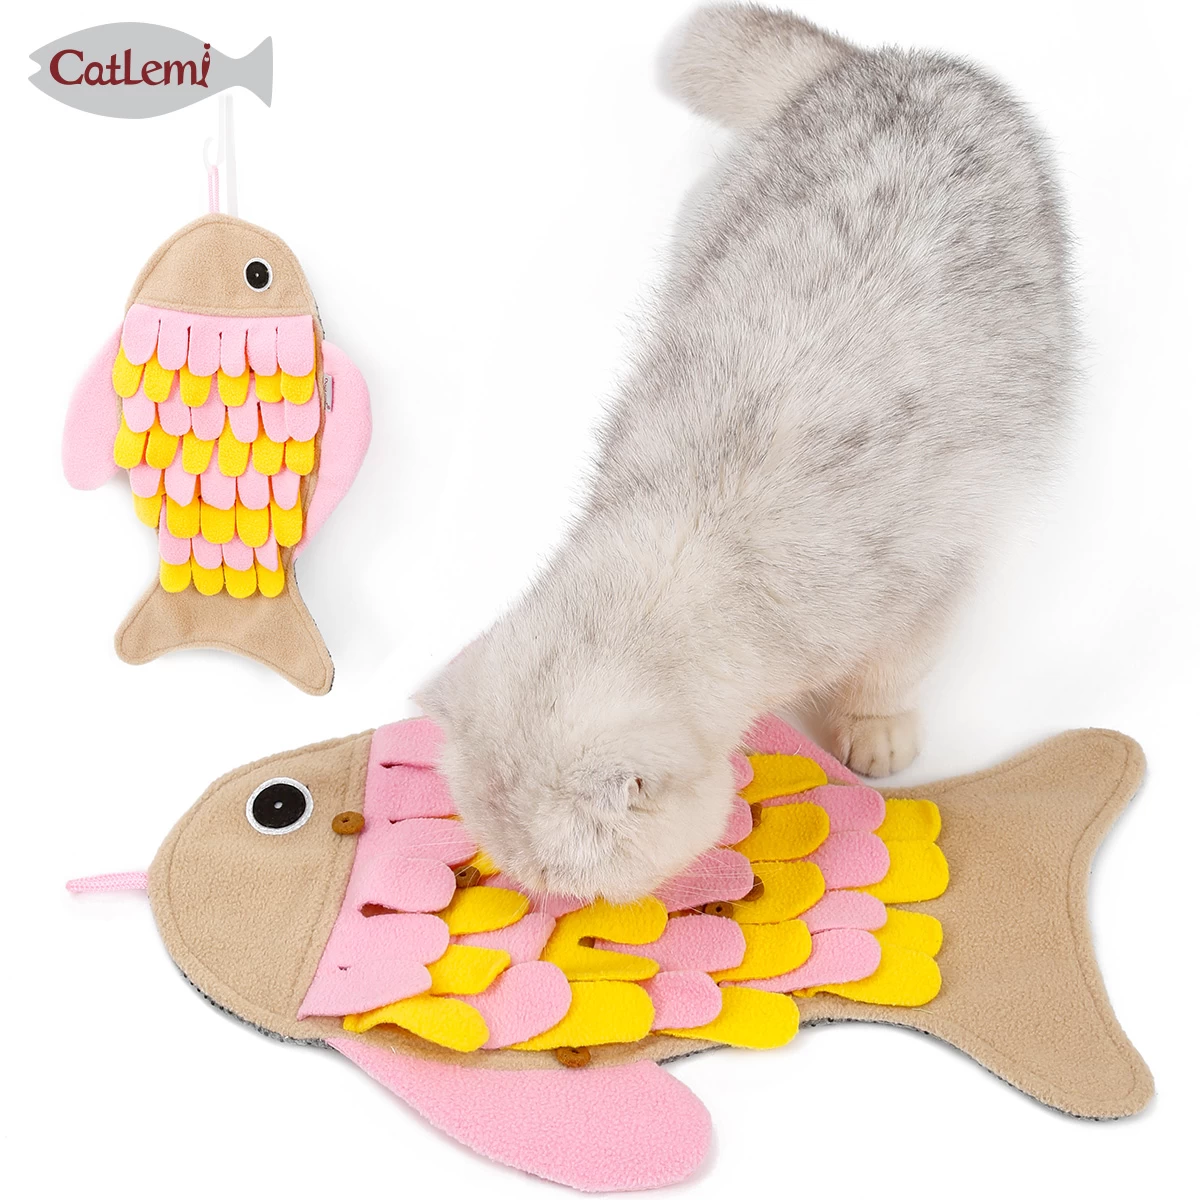 Tampon renifleur pour chat en forme de poisson